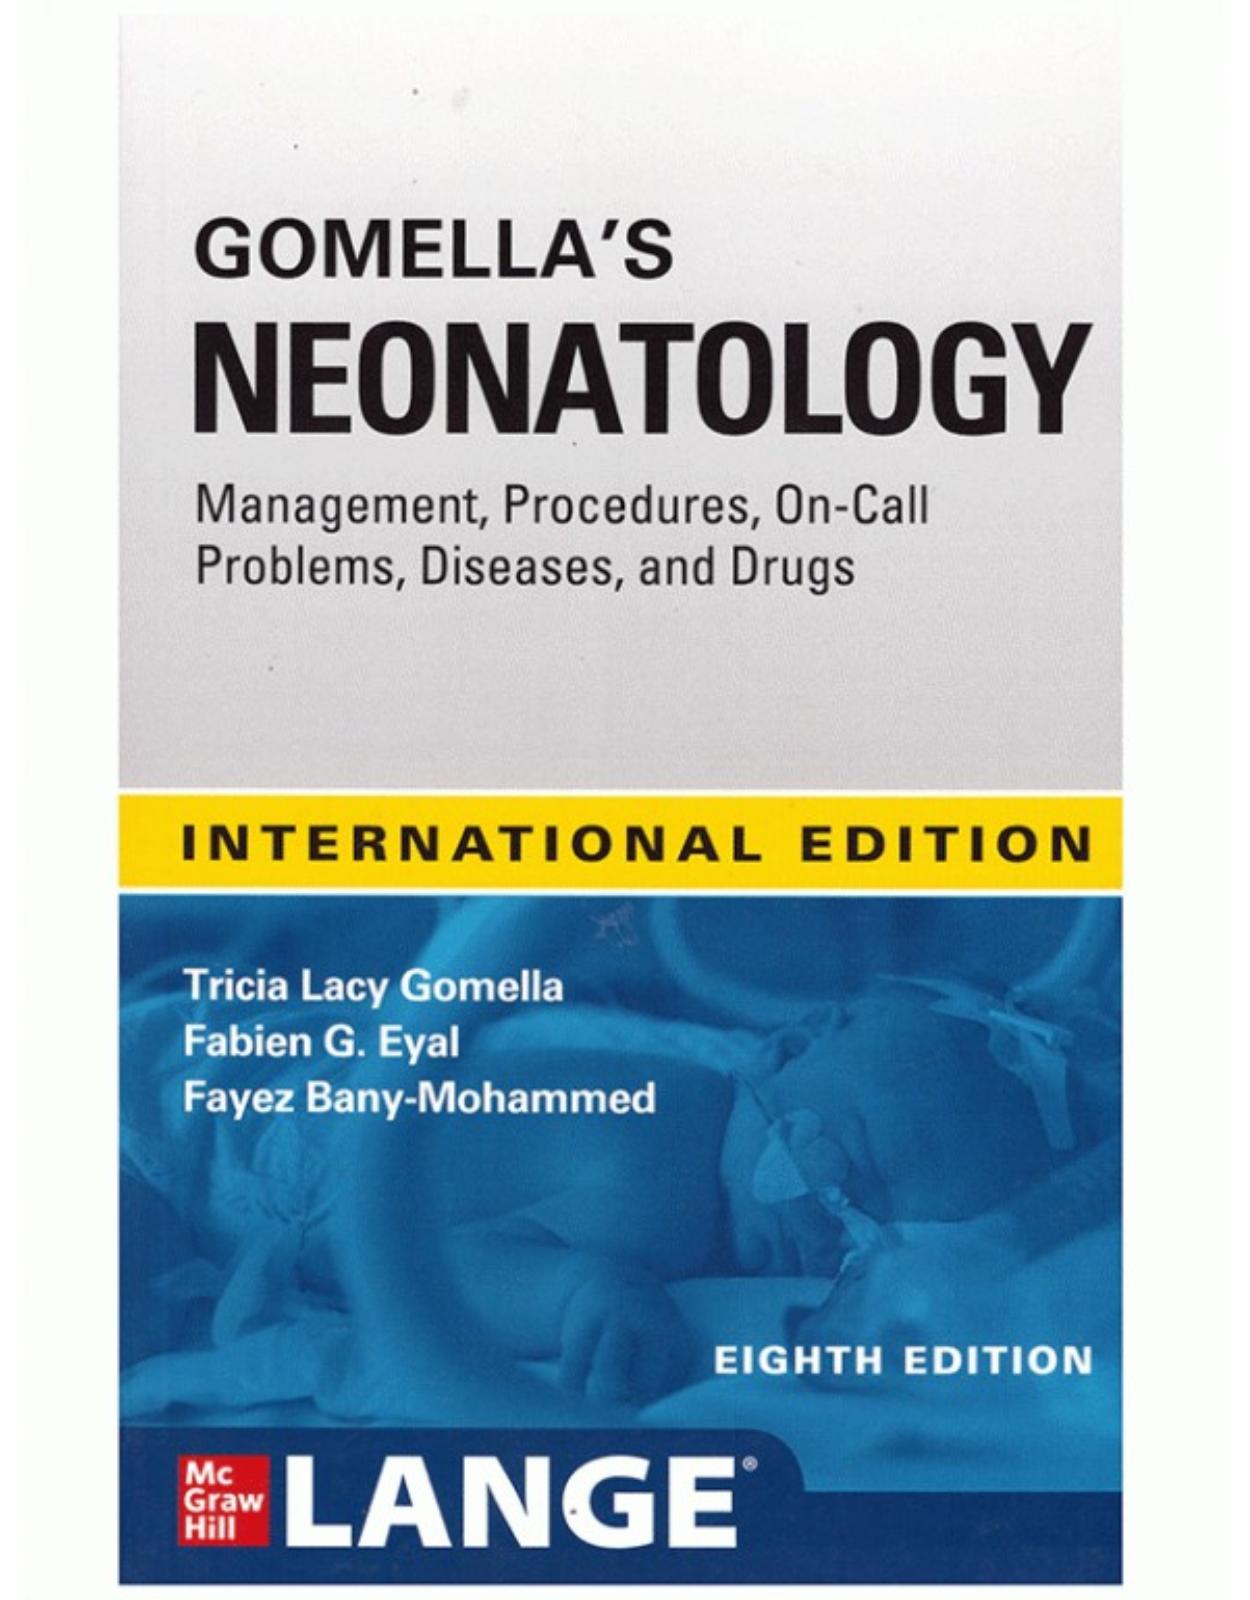 Gomella’s Neonatology